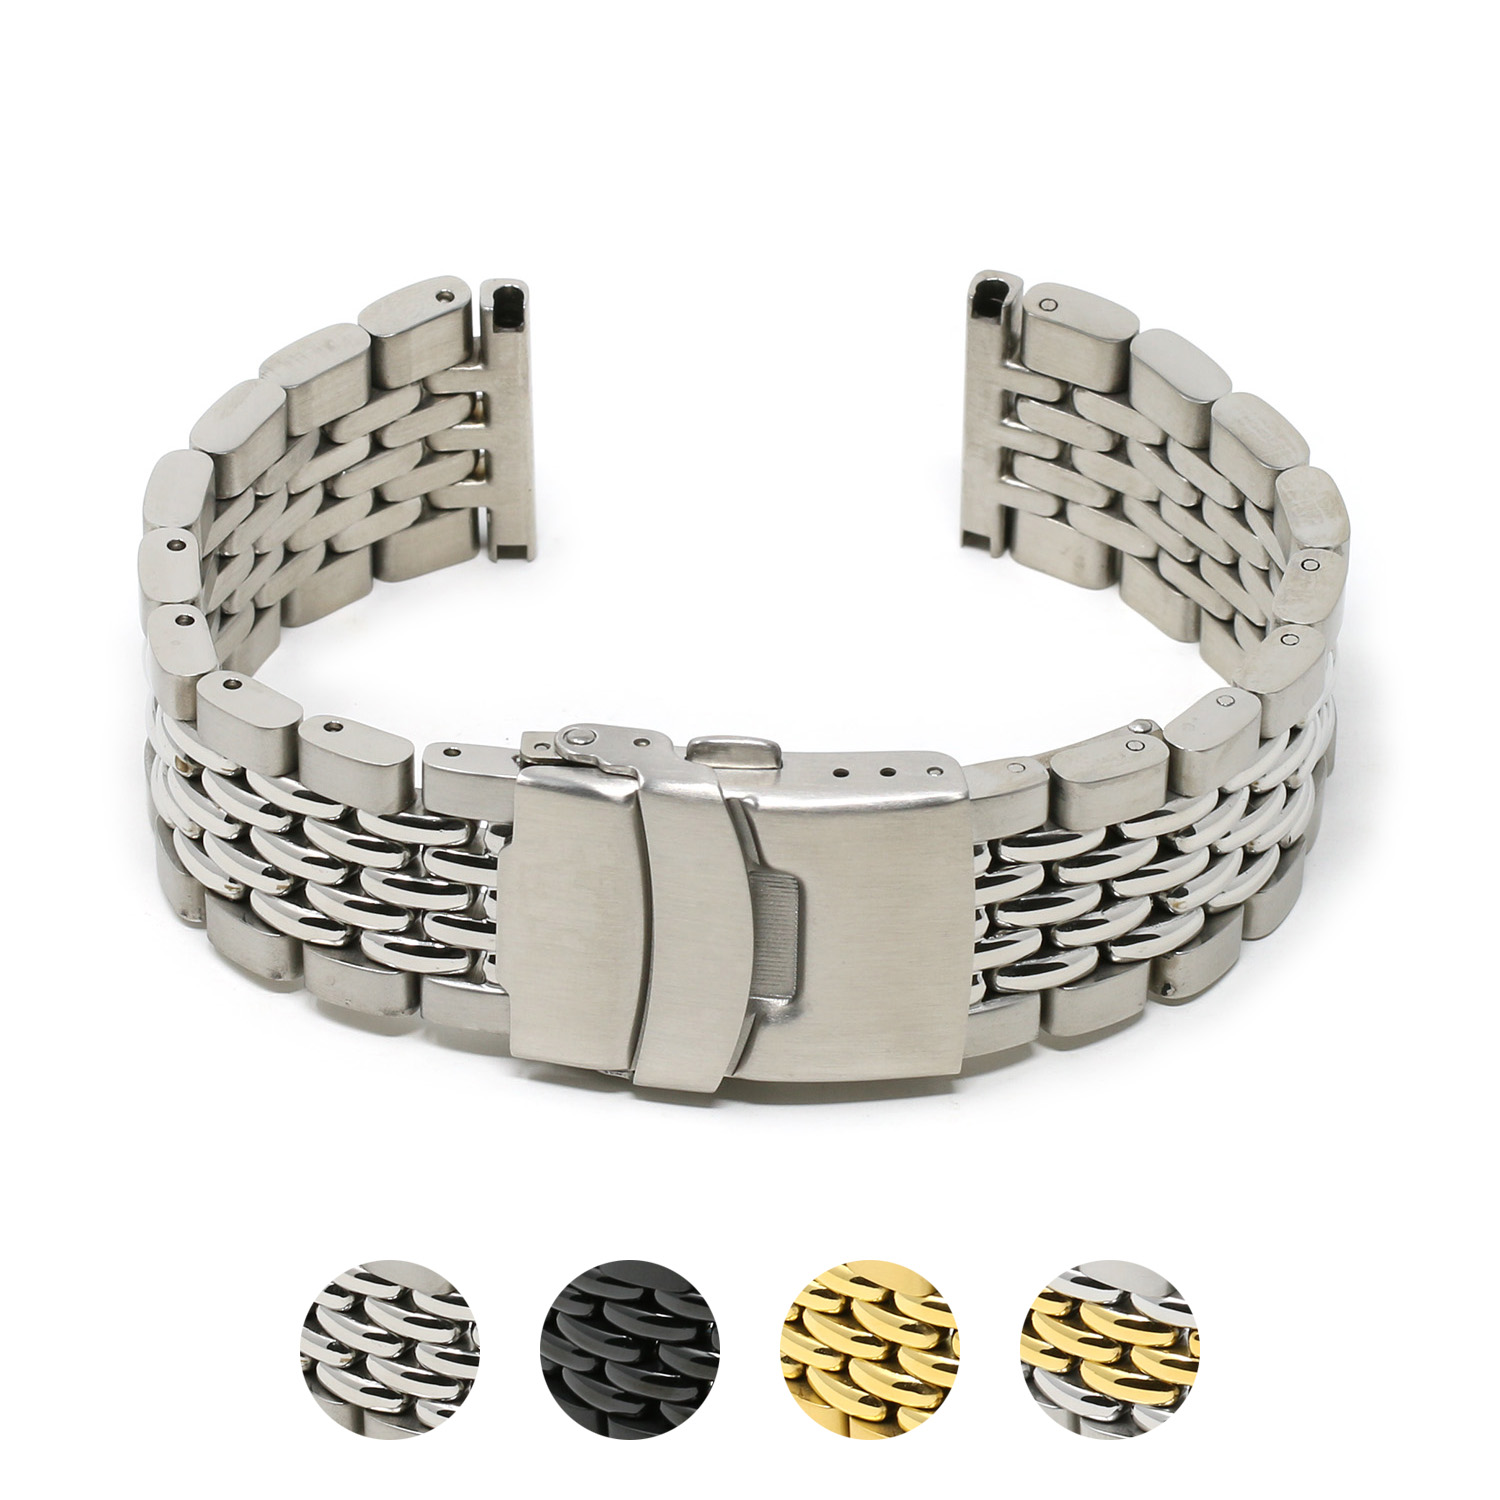 20mm Beads of Rice Smart Watch Bracelet